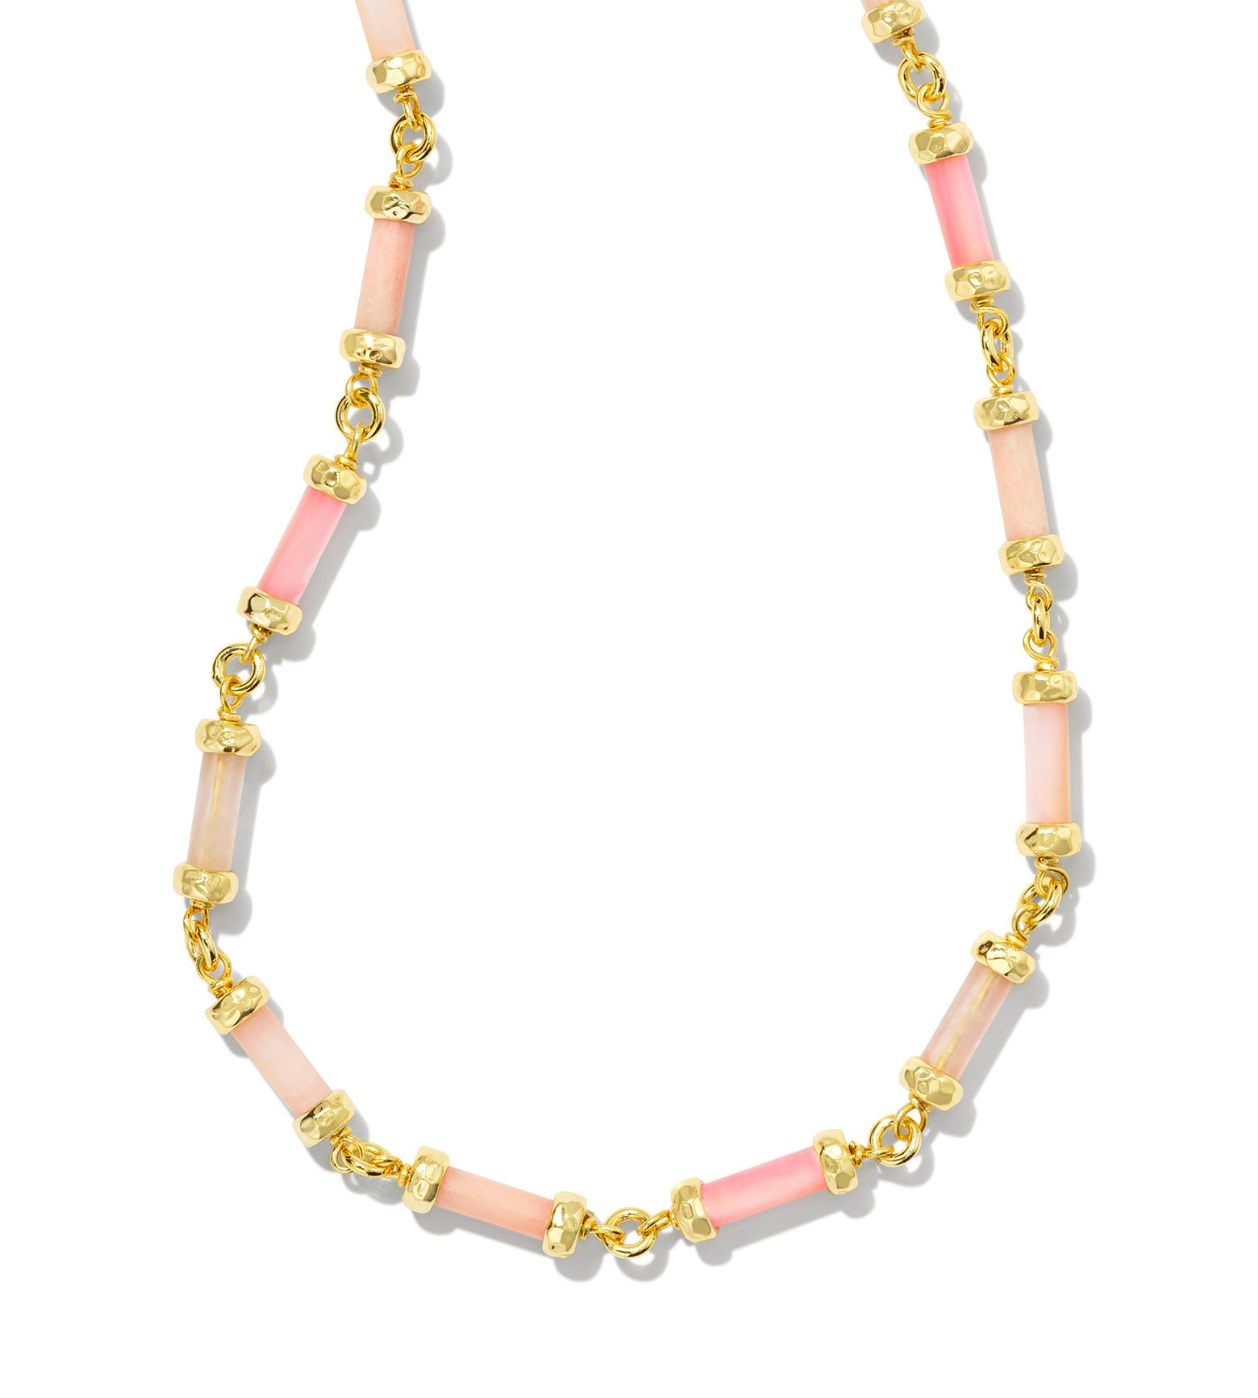 Gigi Gold Strand Necklace in Pink Mix | KENDRA SCOTT